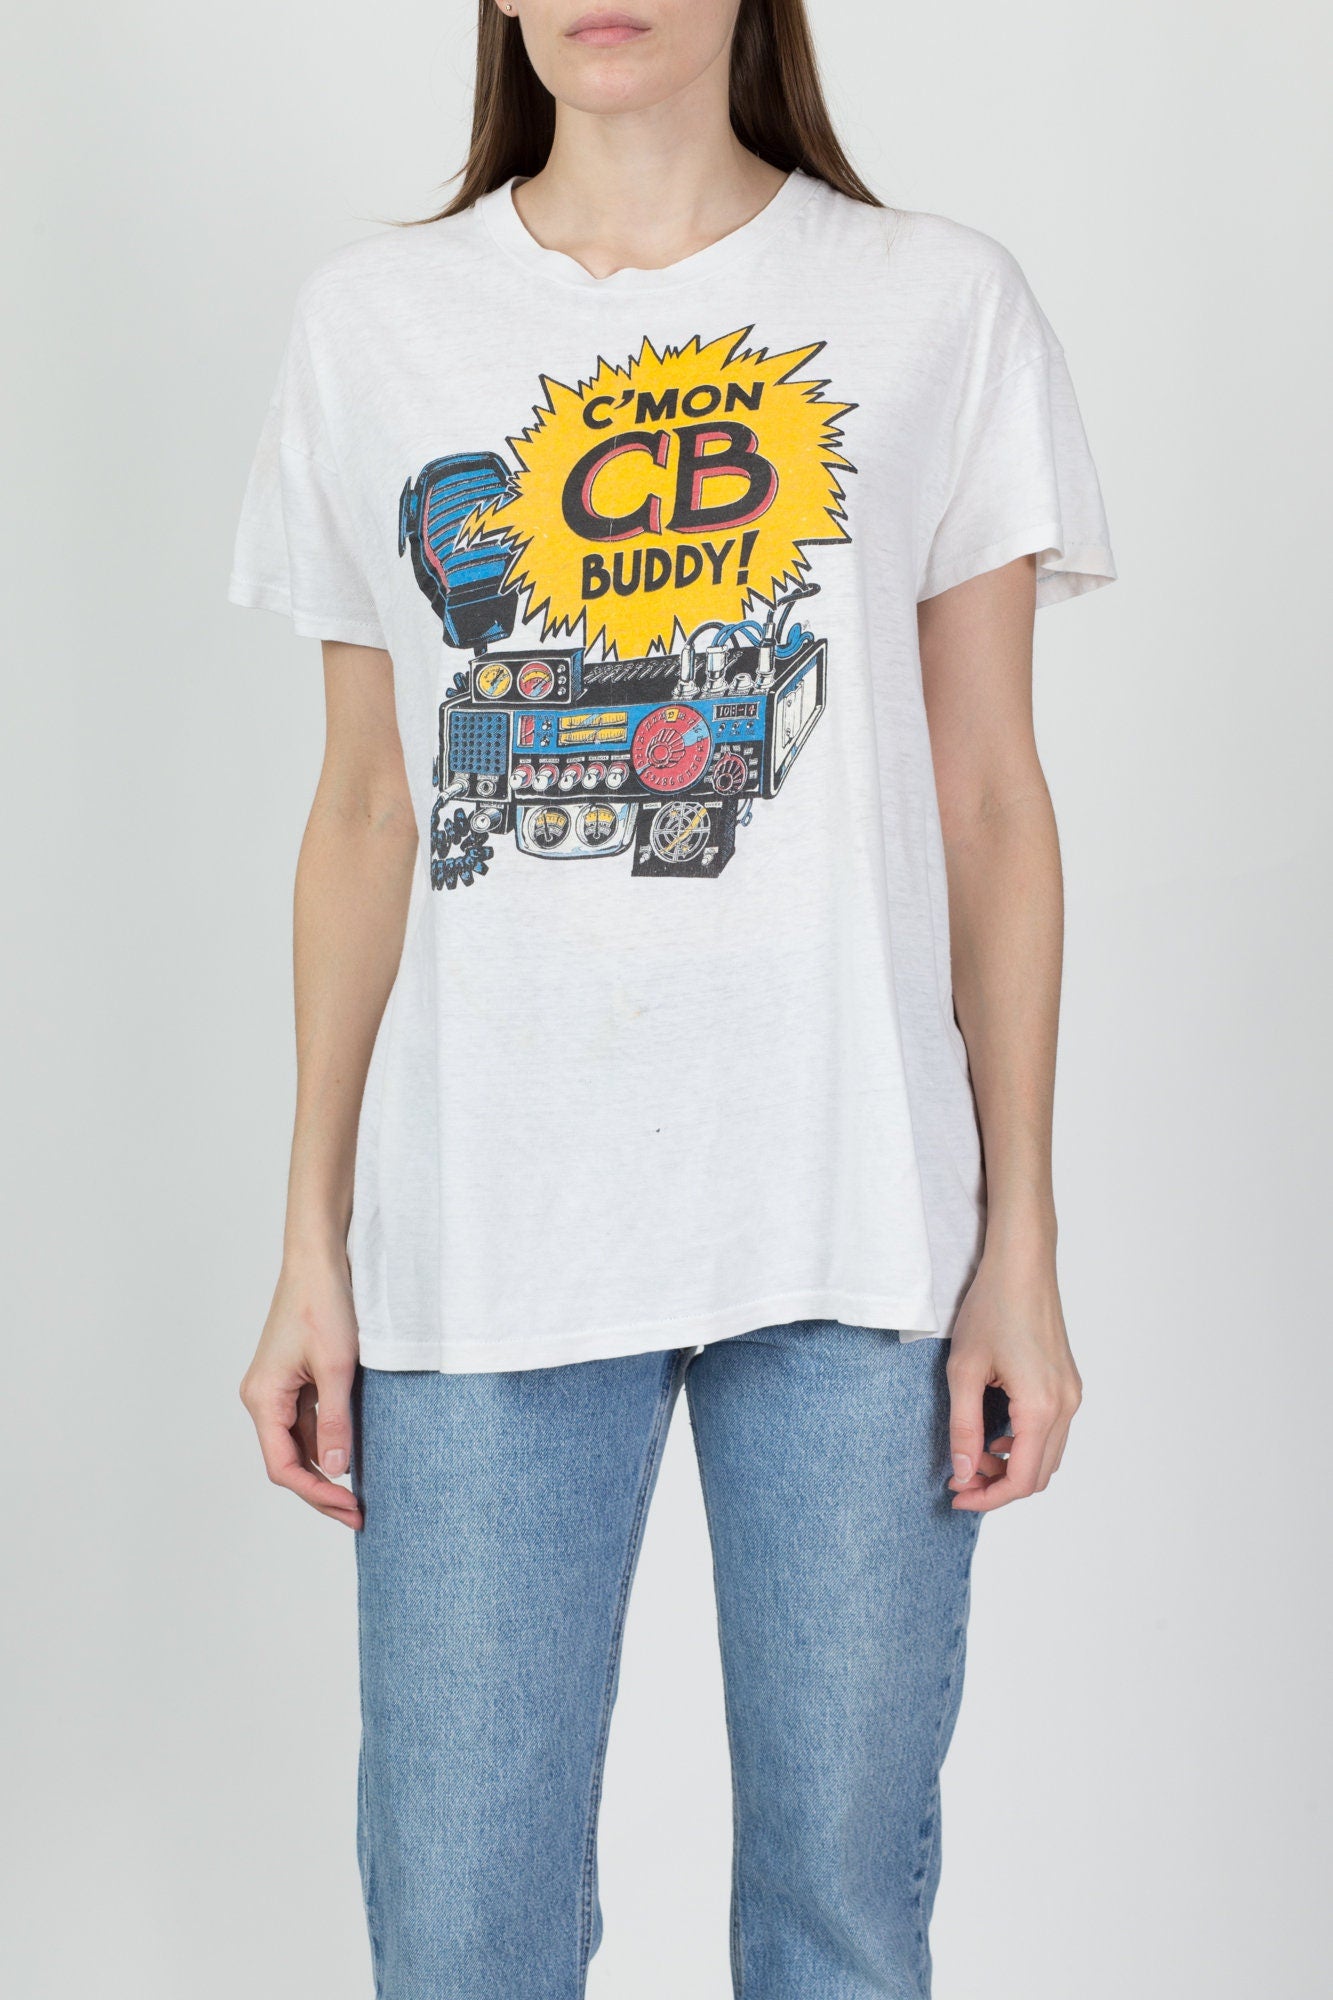 80s CB Radio "C'mon CB Buddy!" Graphic Tee - Men's Large, Women's XL 